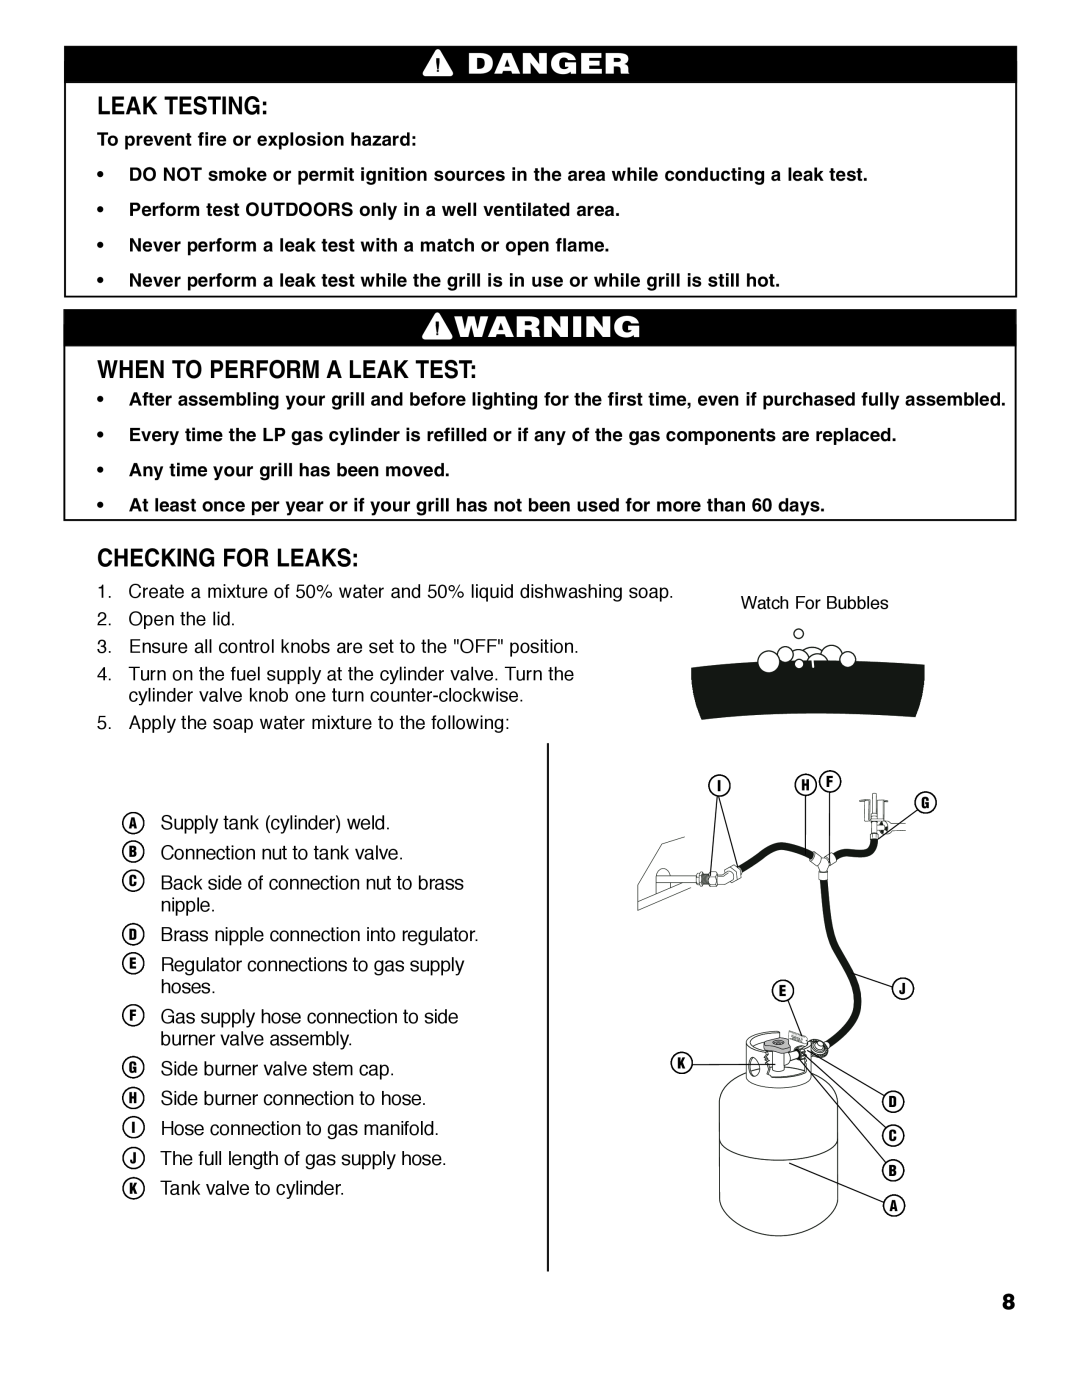 Brinkmann ProSeries 2310 owner manual Leak Testing, When To Perform A Leak Test, Checking For Leaks, Danger 